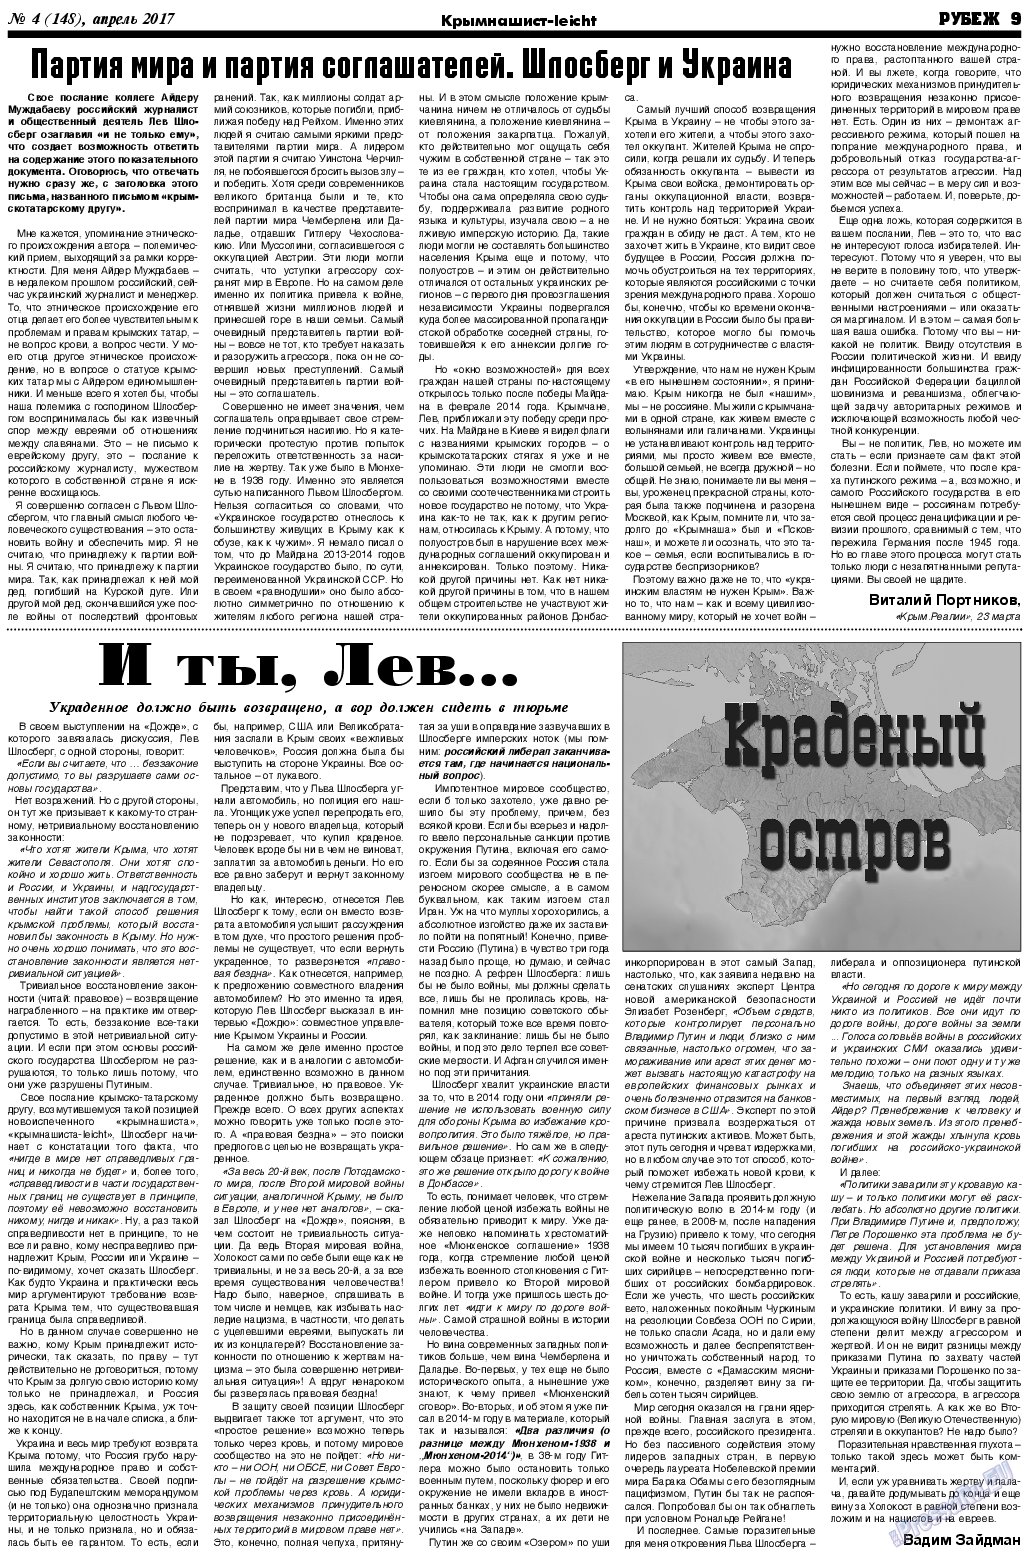 Рубеж, газета. 2017 №4 стр.9